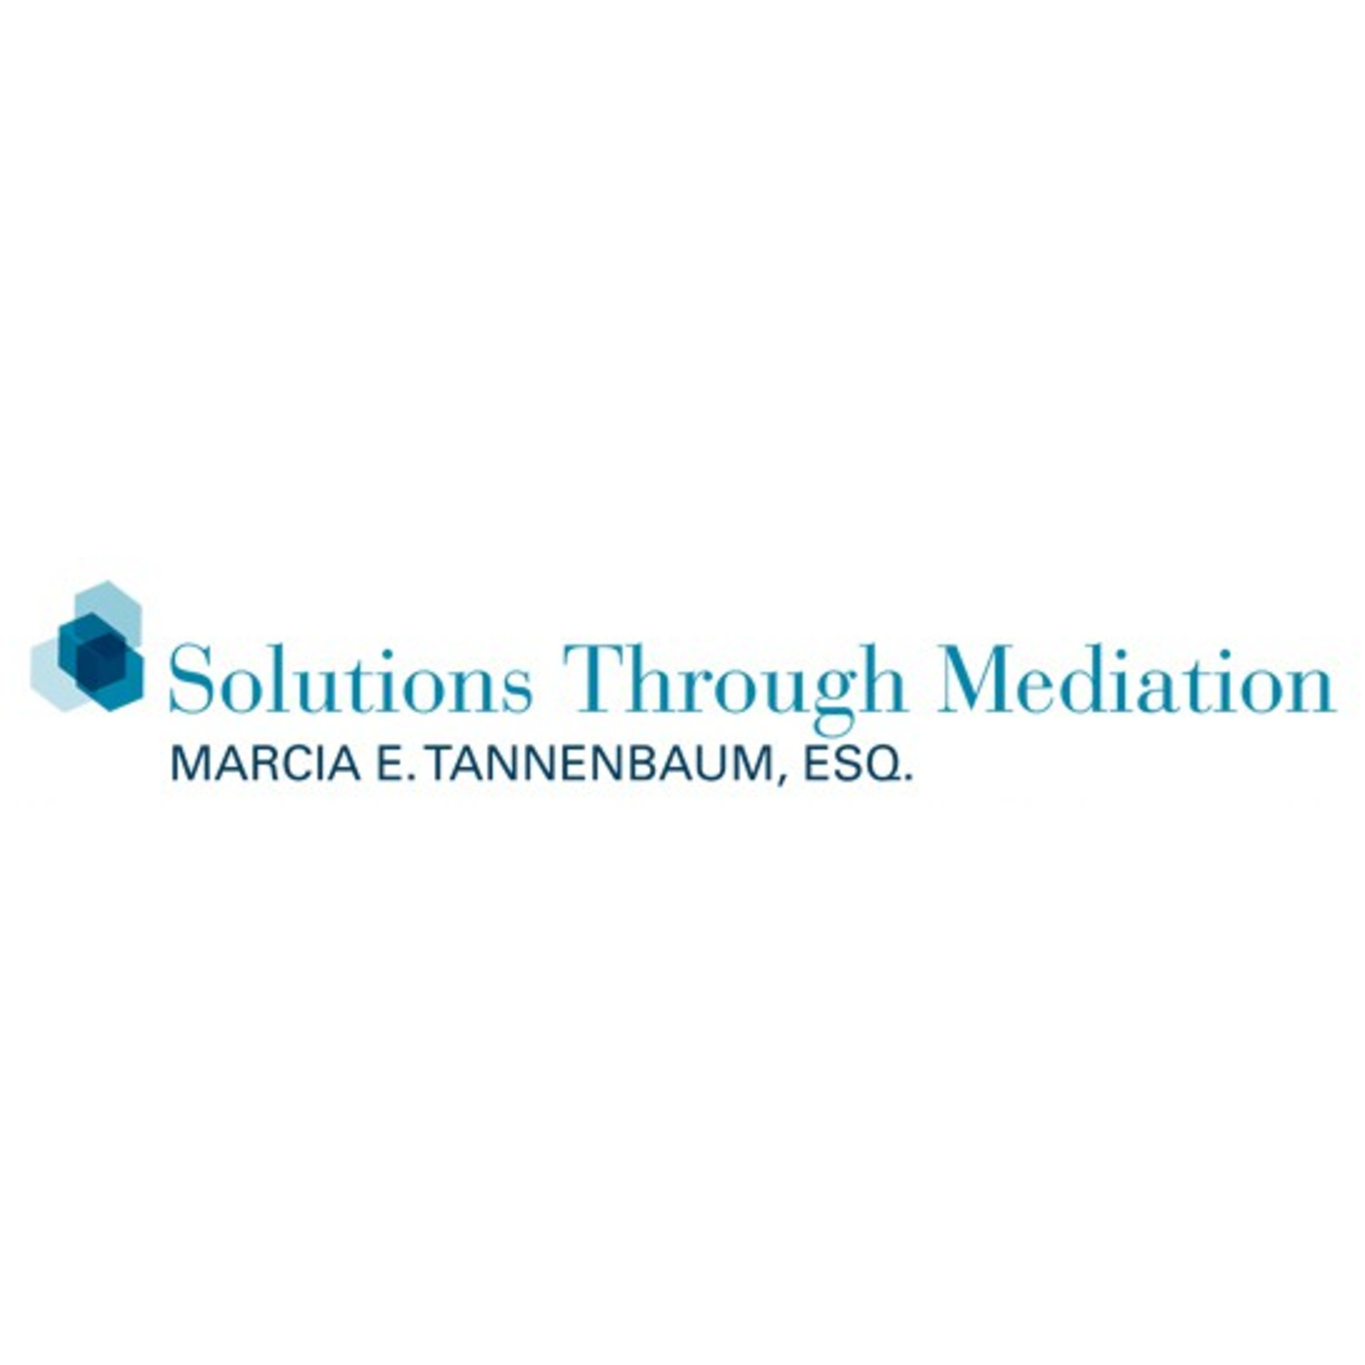 Solutions Through Mediation Marcia E. Tannenbaum, ESQ.